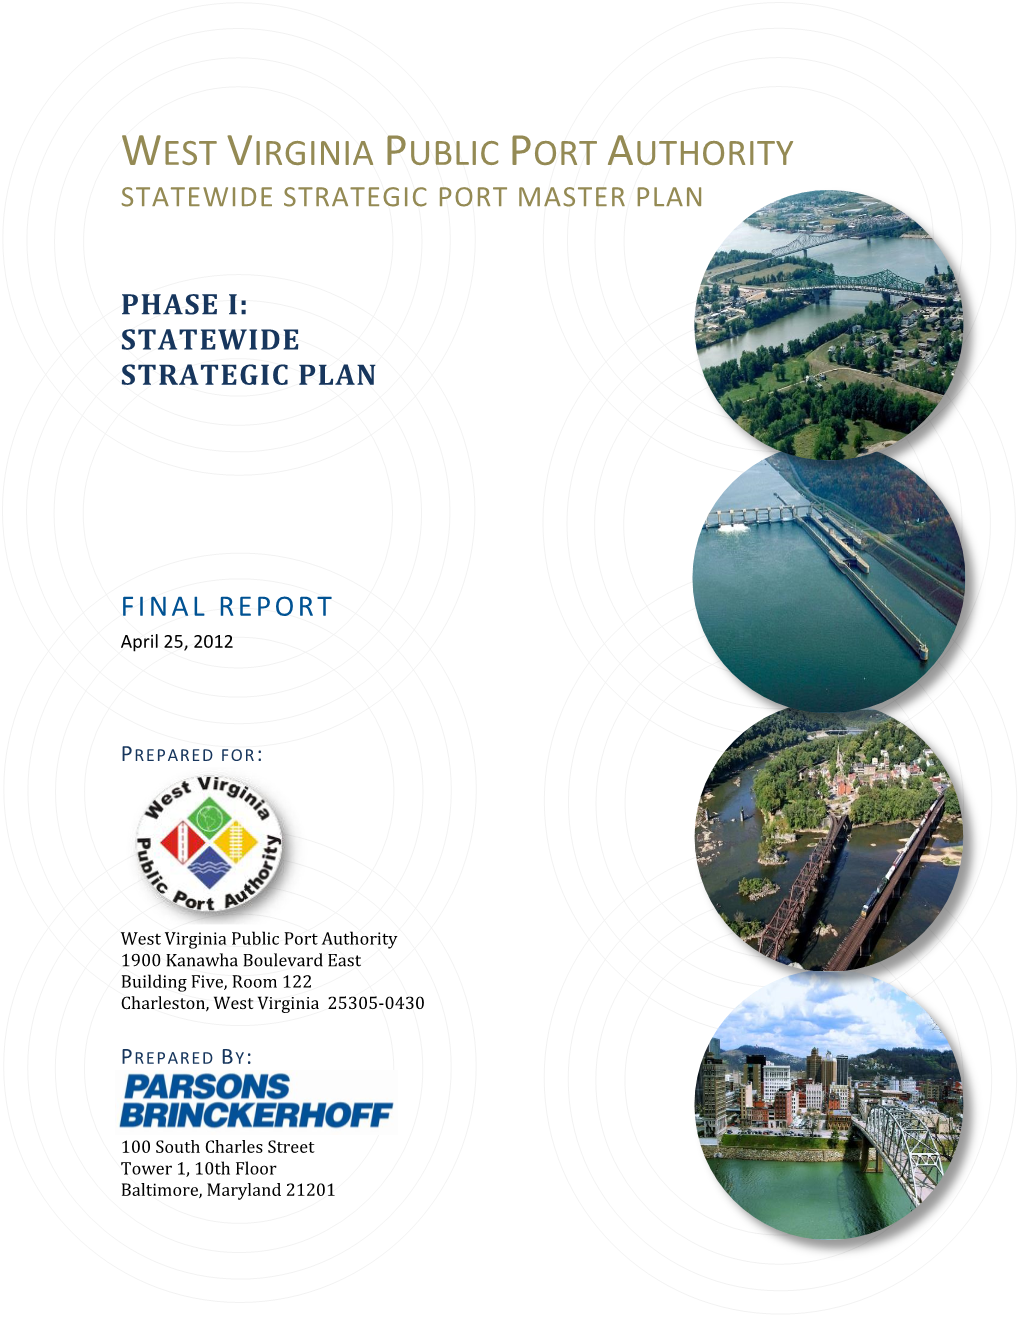 West Virginia Public Port Authority Statewide Strategic Port Master Plan